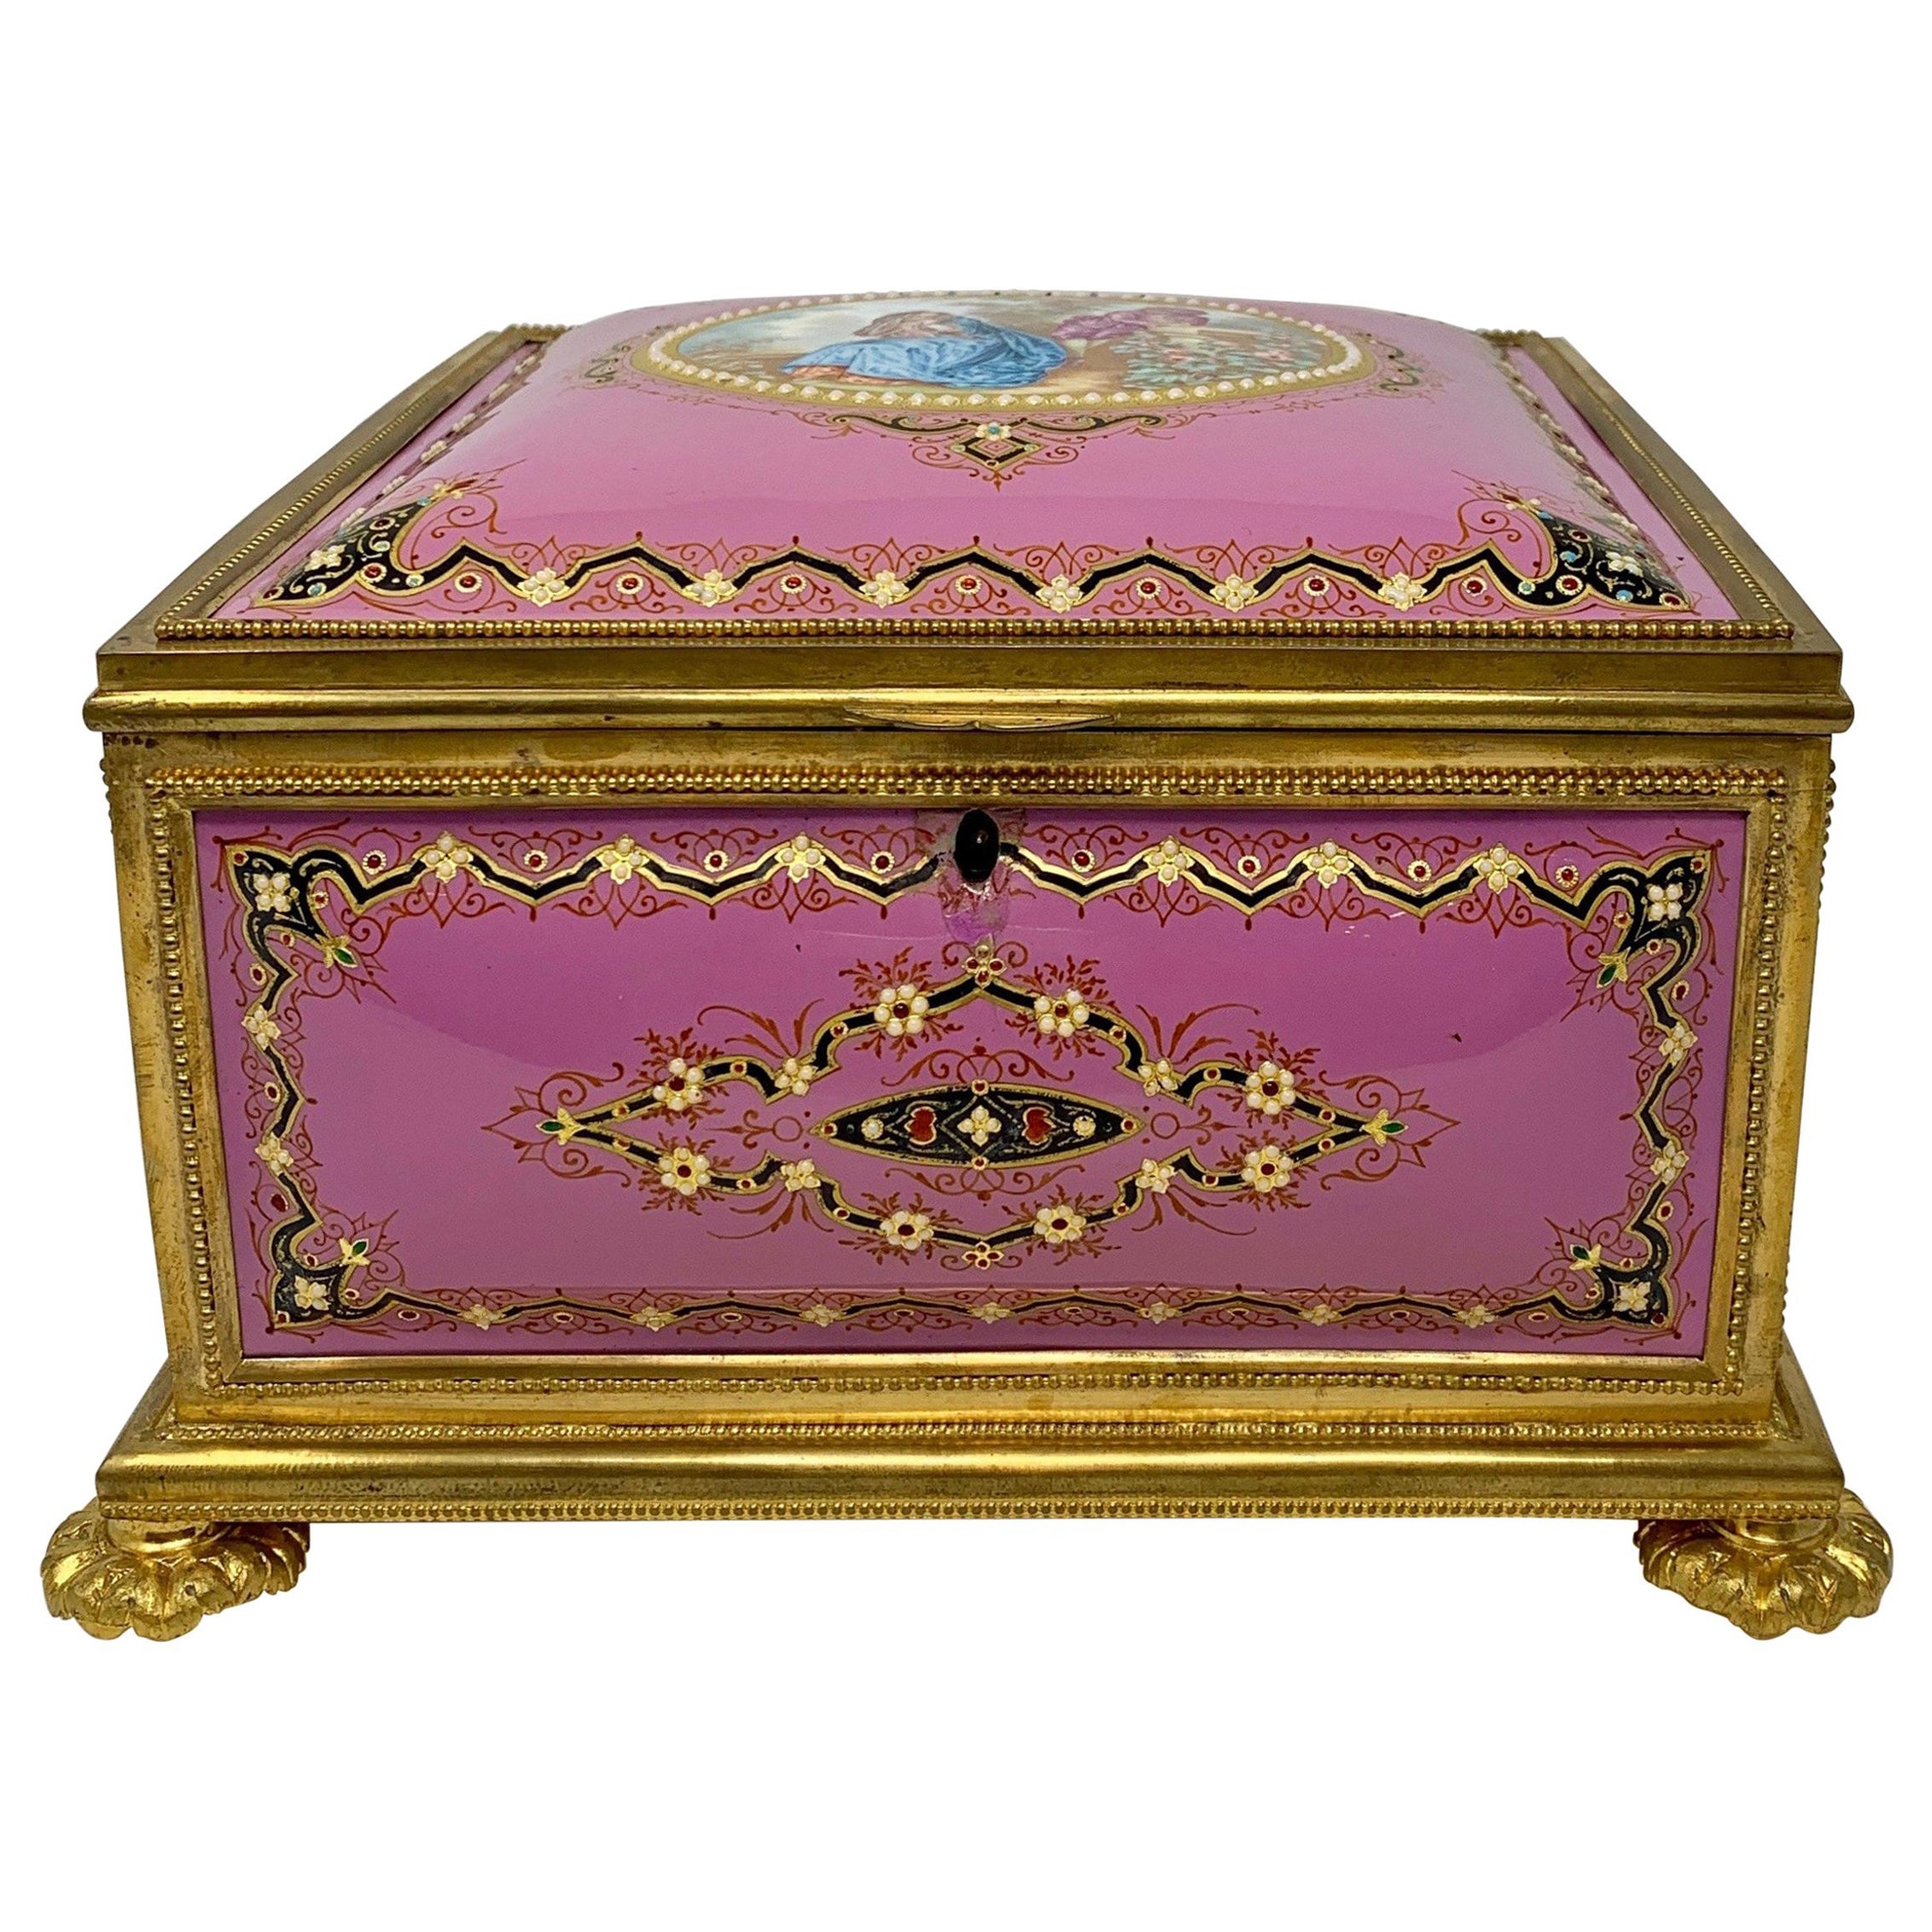 Antique French Pink Enameled Ormolu Jewel Box, circa 1870